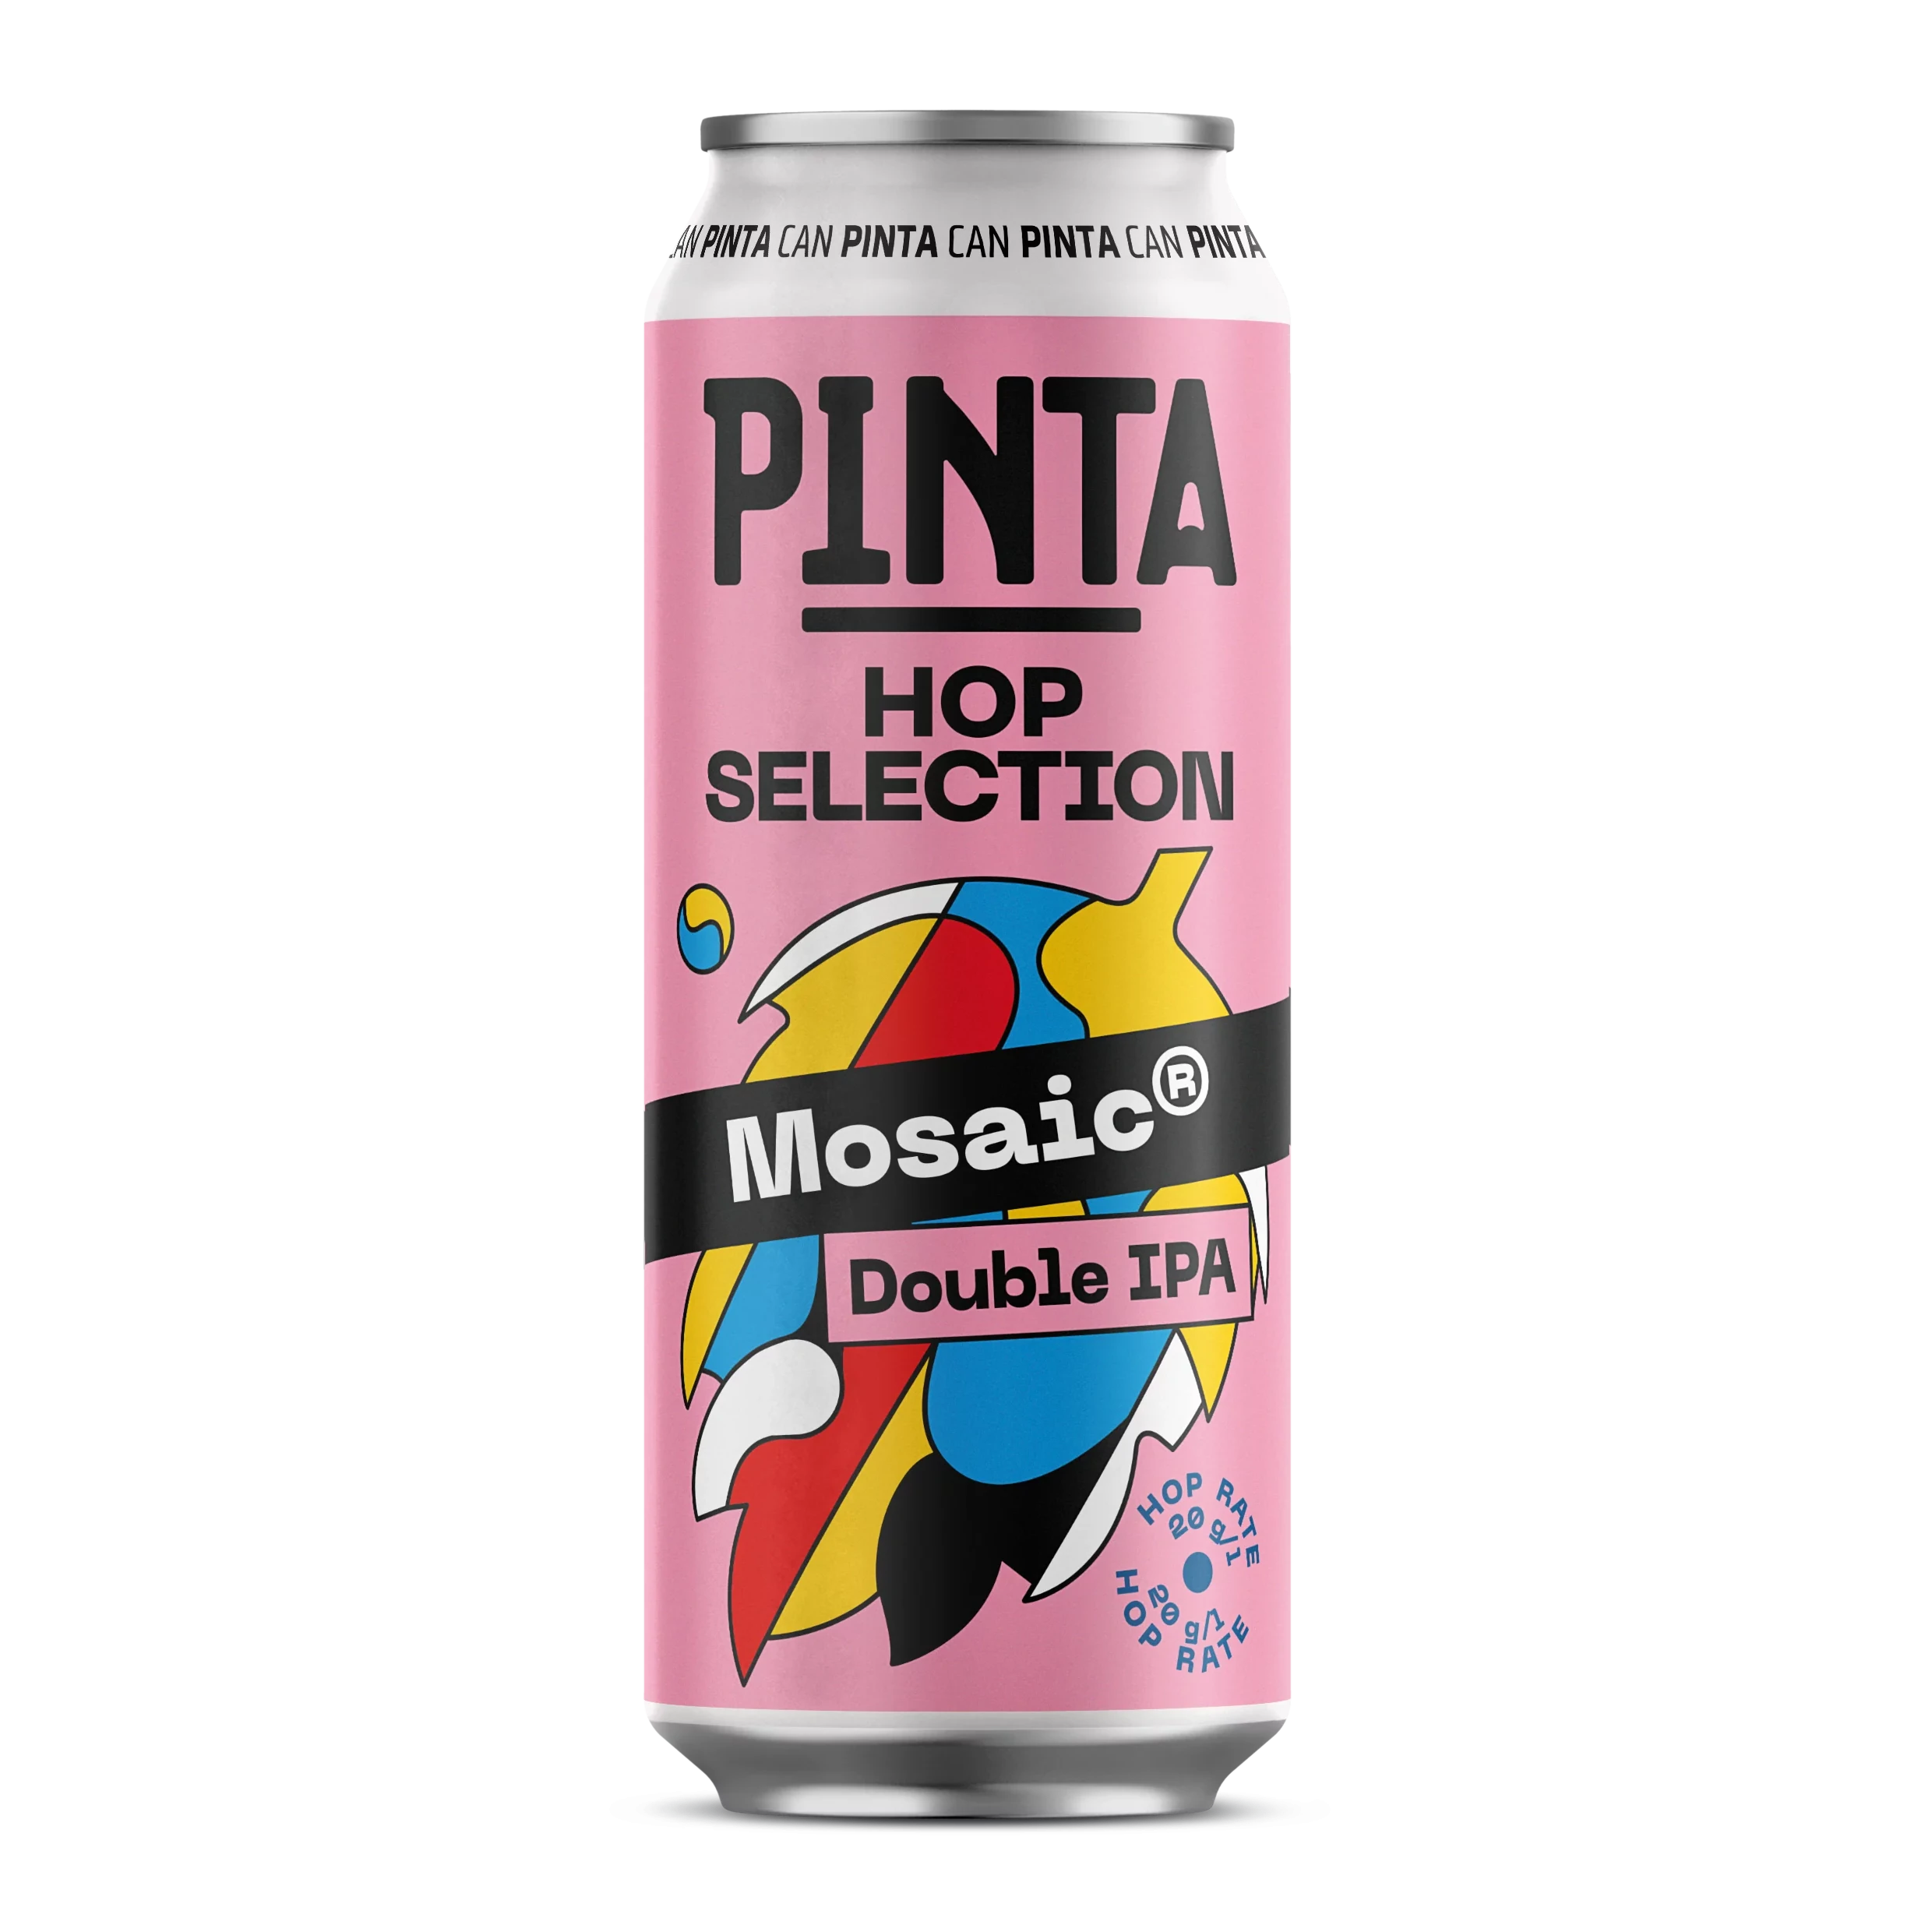 PINTA HOP SELECTION Mosaic Double IPA 8,3% 0,5L